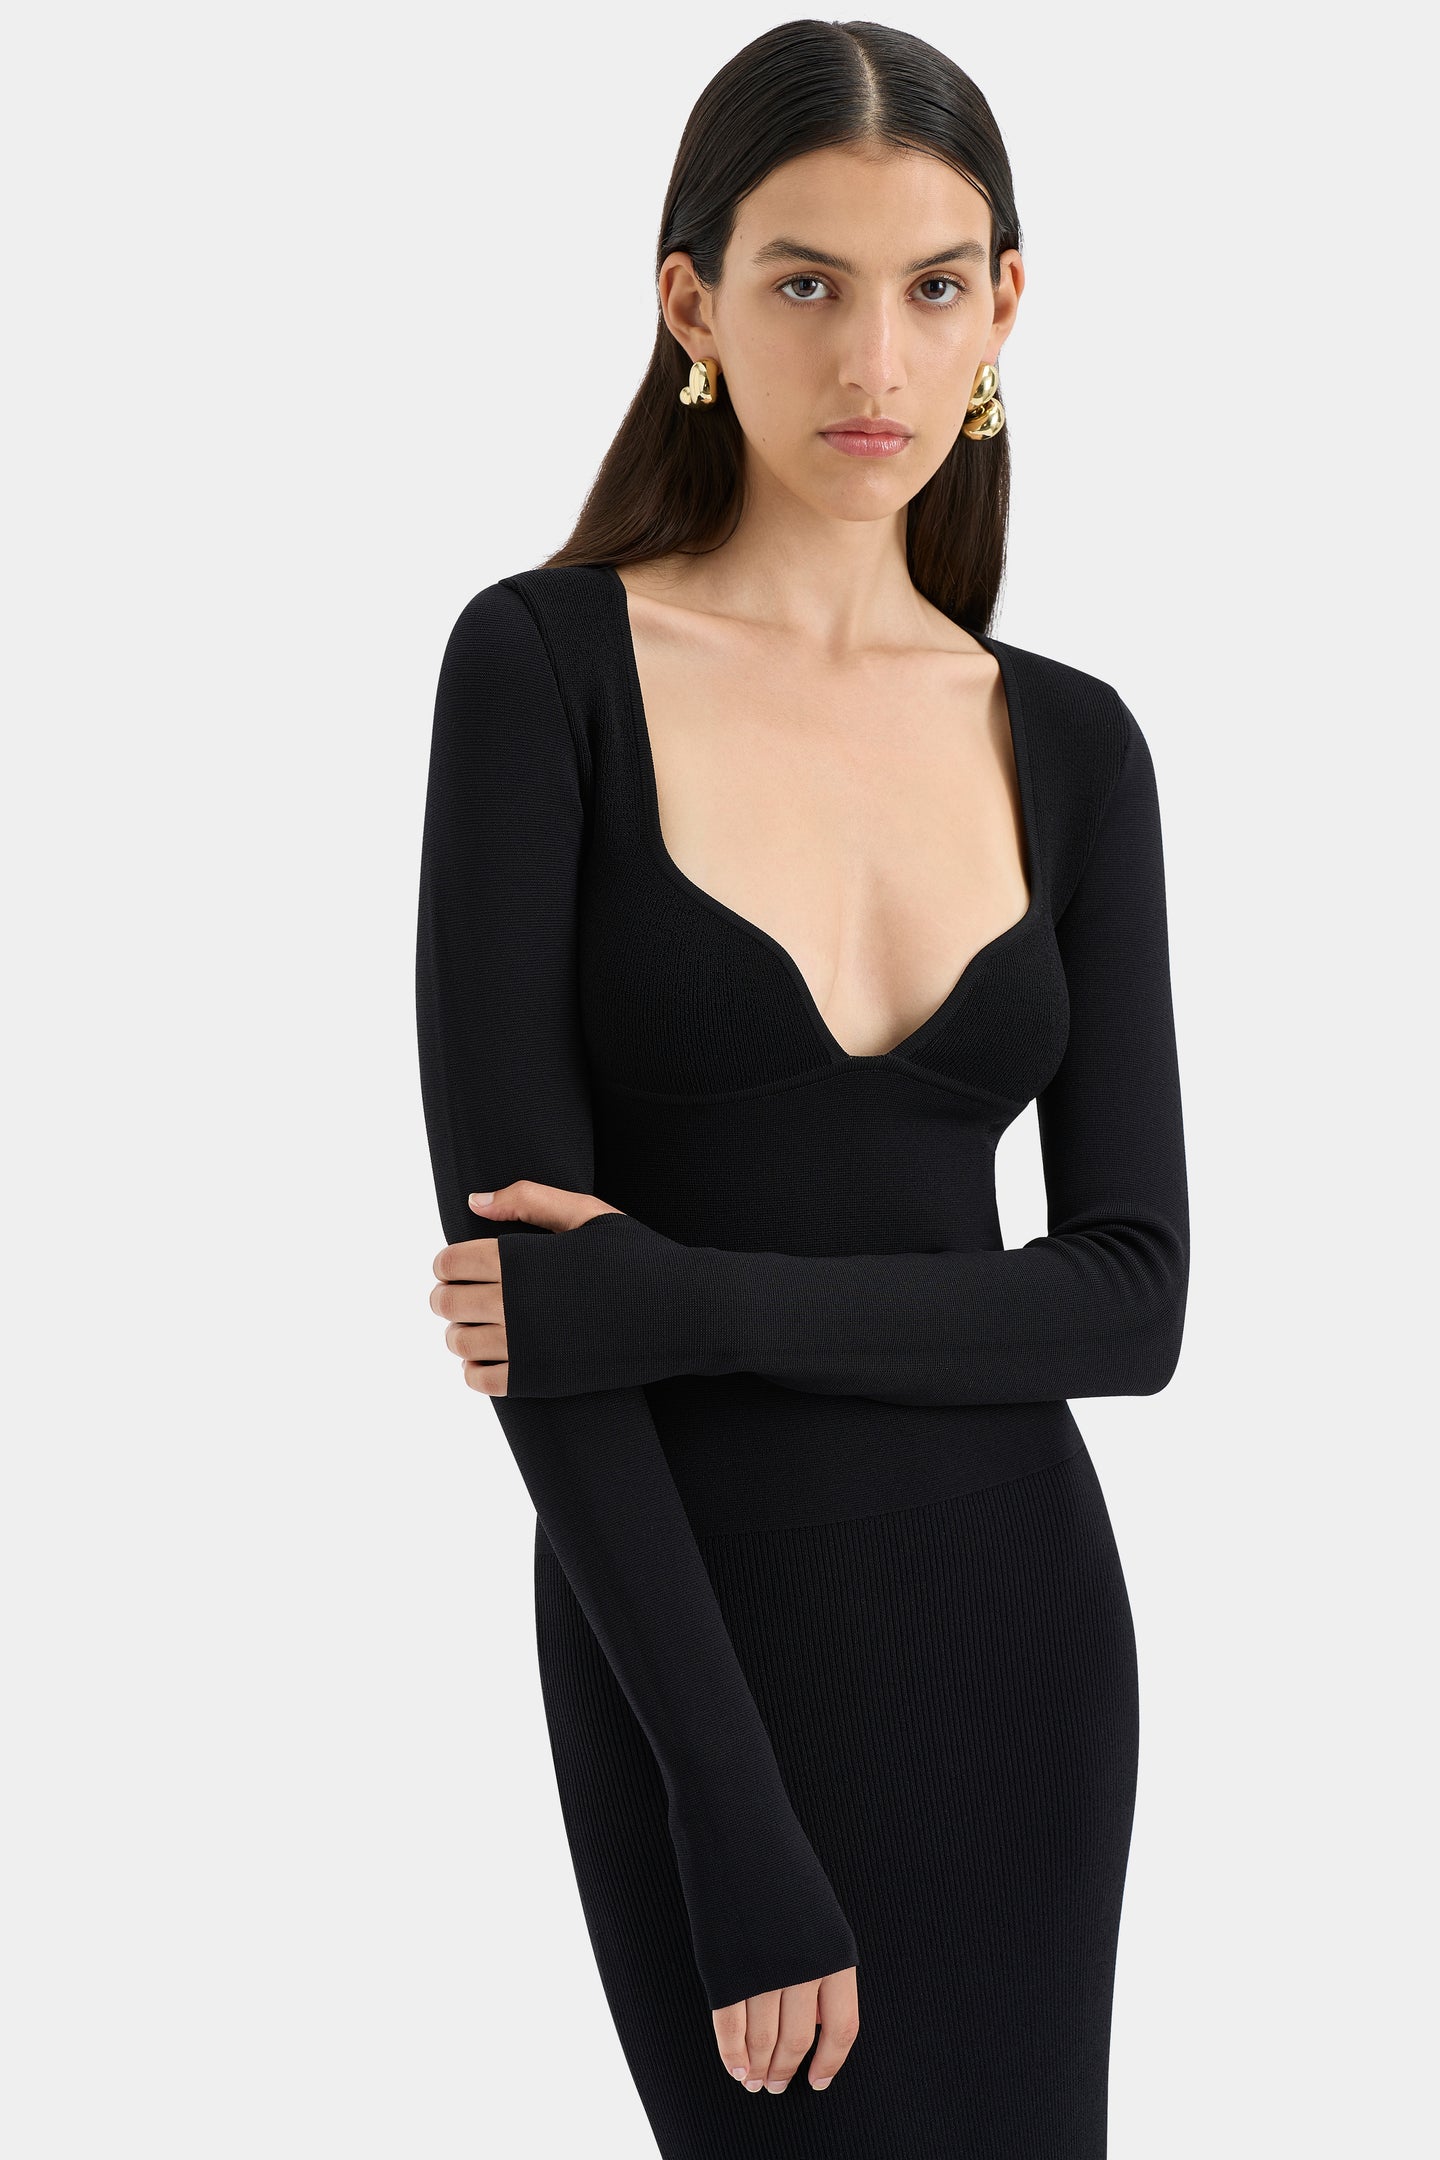 SIR the label Helena Long Sleeve Maxi Dress BLACK